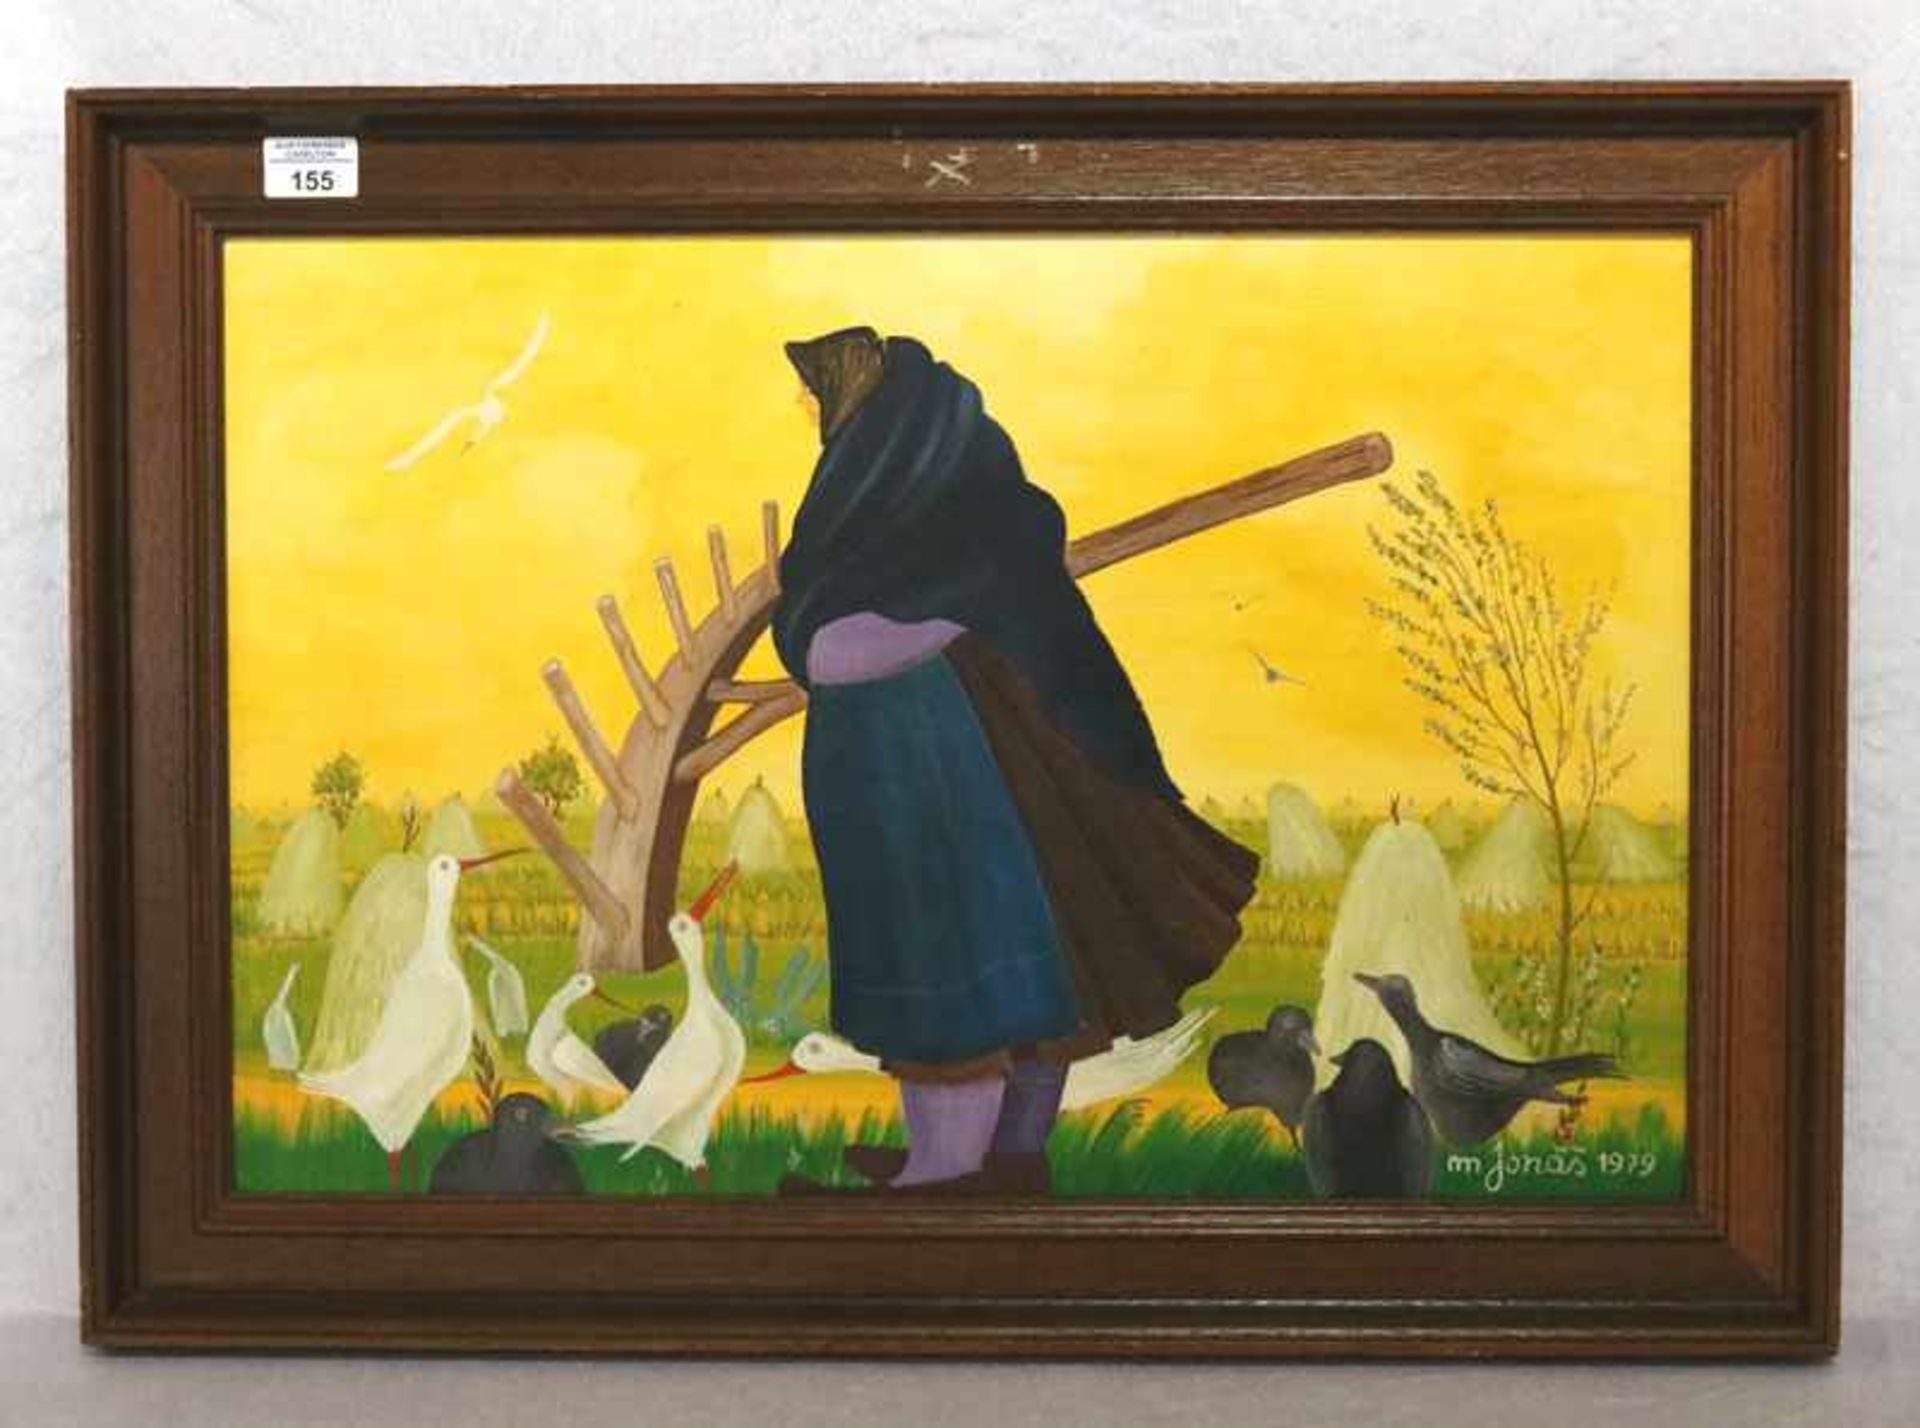 Gemälde 'Bäuerin mit Vogel', signiert M. Jonas, 1979, * 1924 + 1996, gerahmt, incl. Rahmen 51 cm x